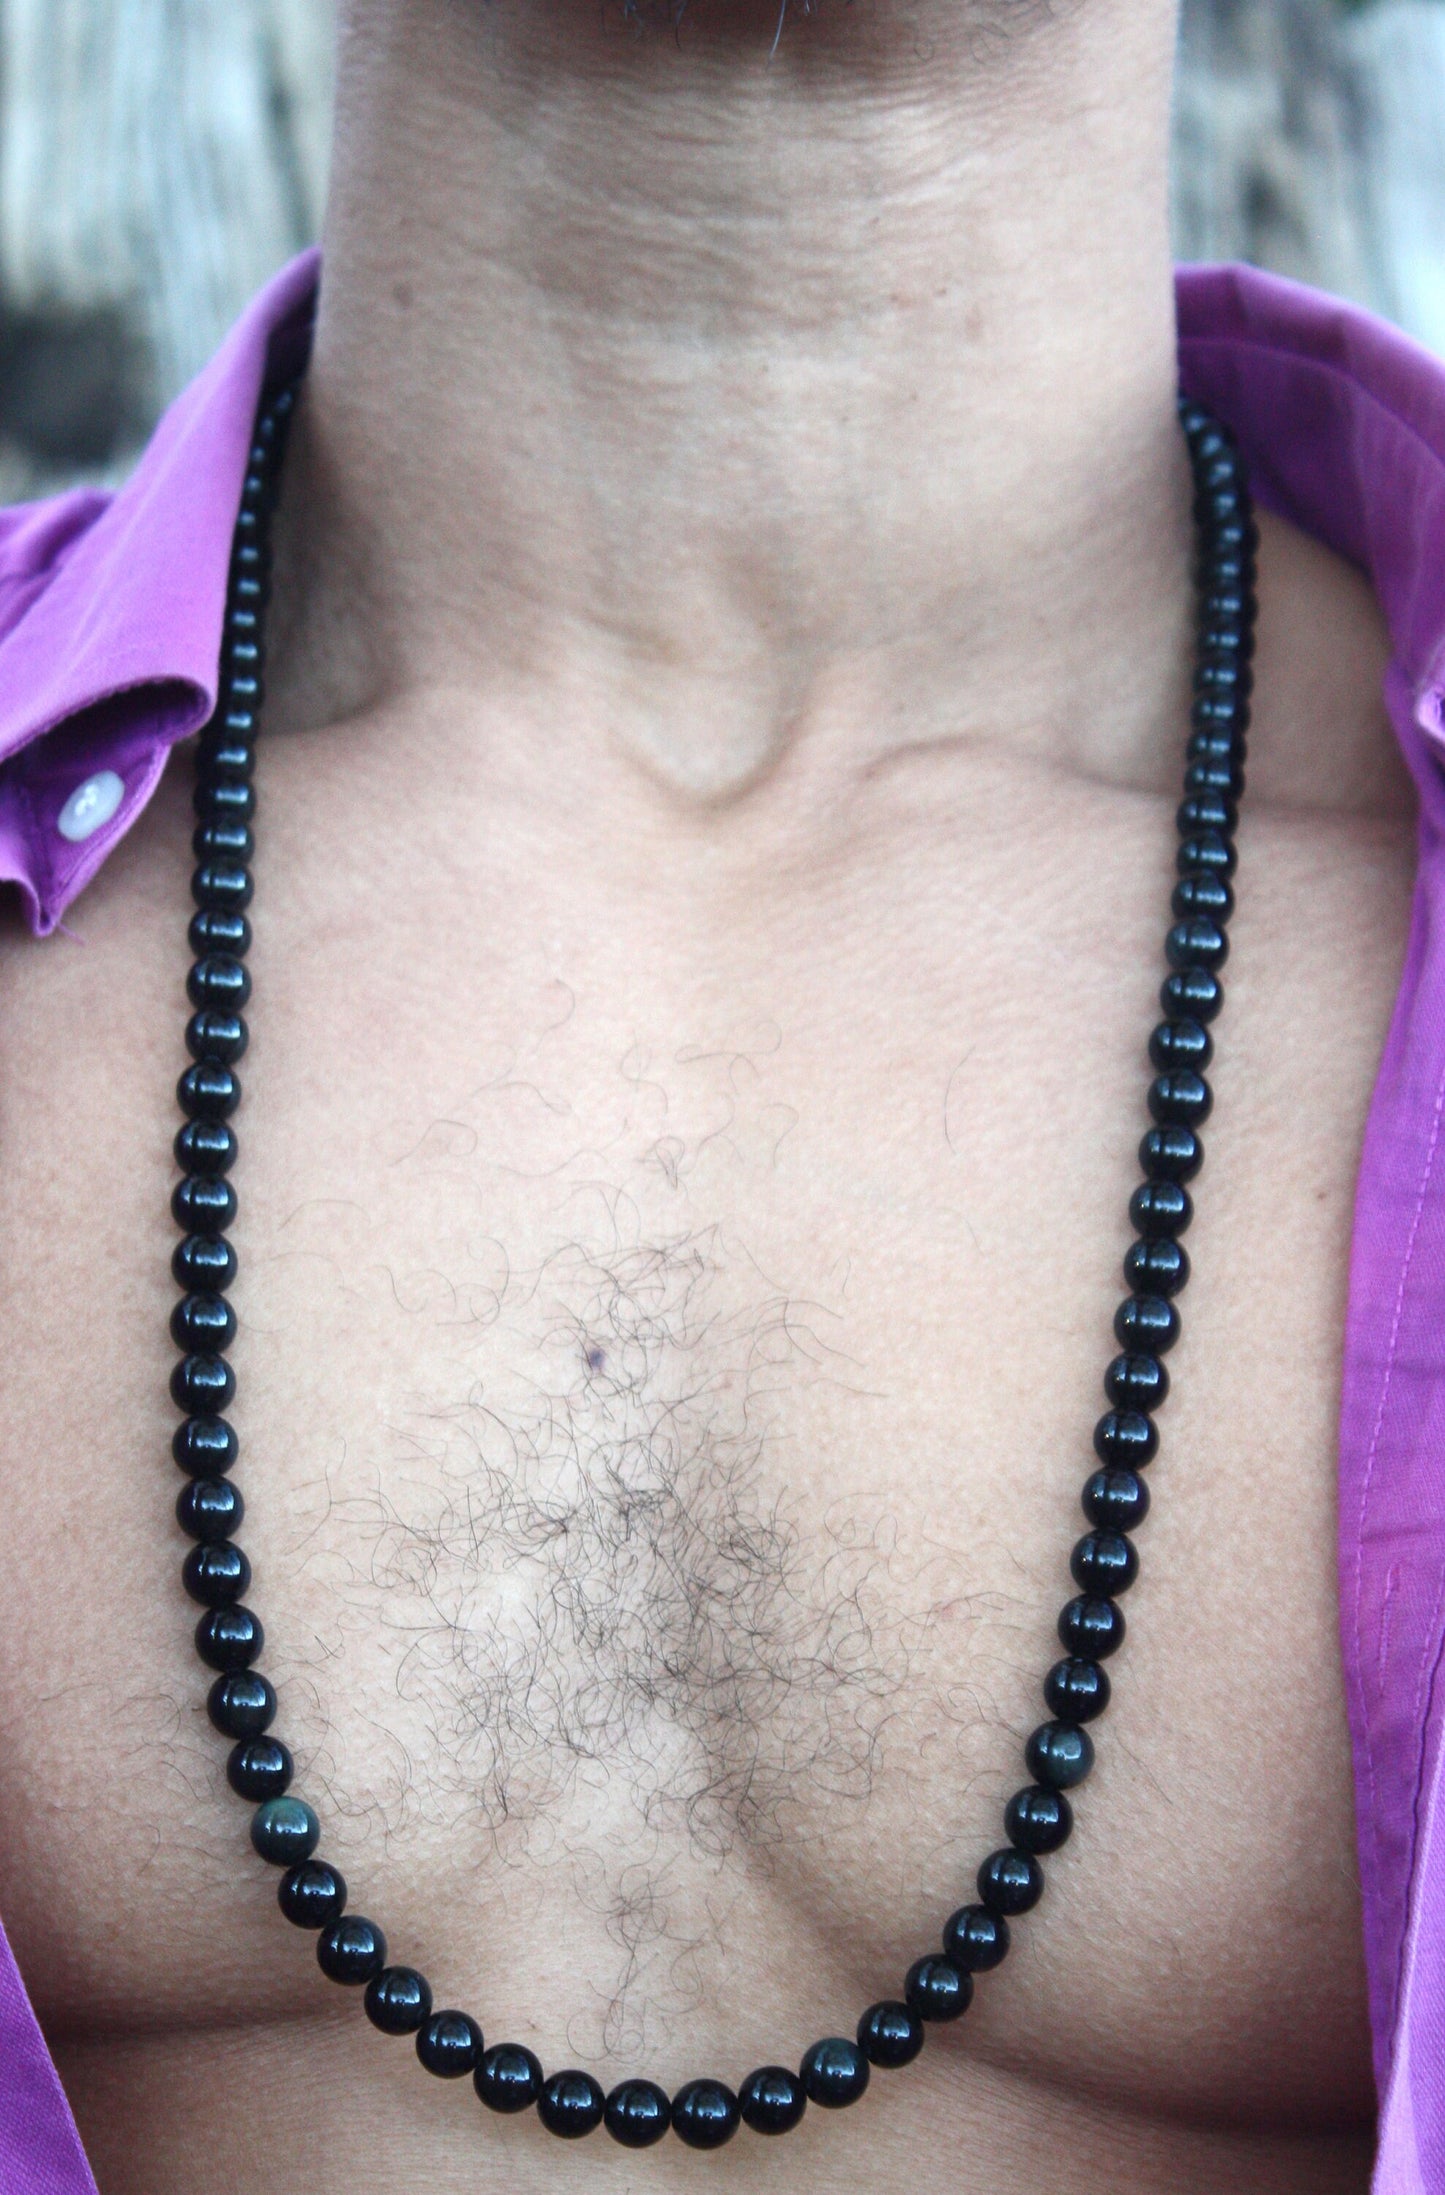 Black Obsidian Necklace - Beaded Gemstone Neckless for Men/Women 8mm Genuine Obsidian Crystal Beads